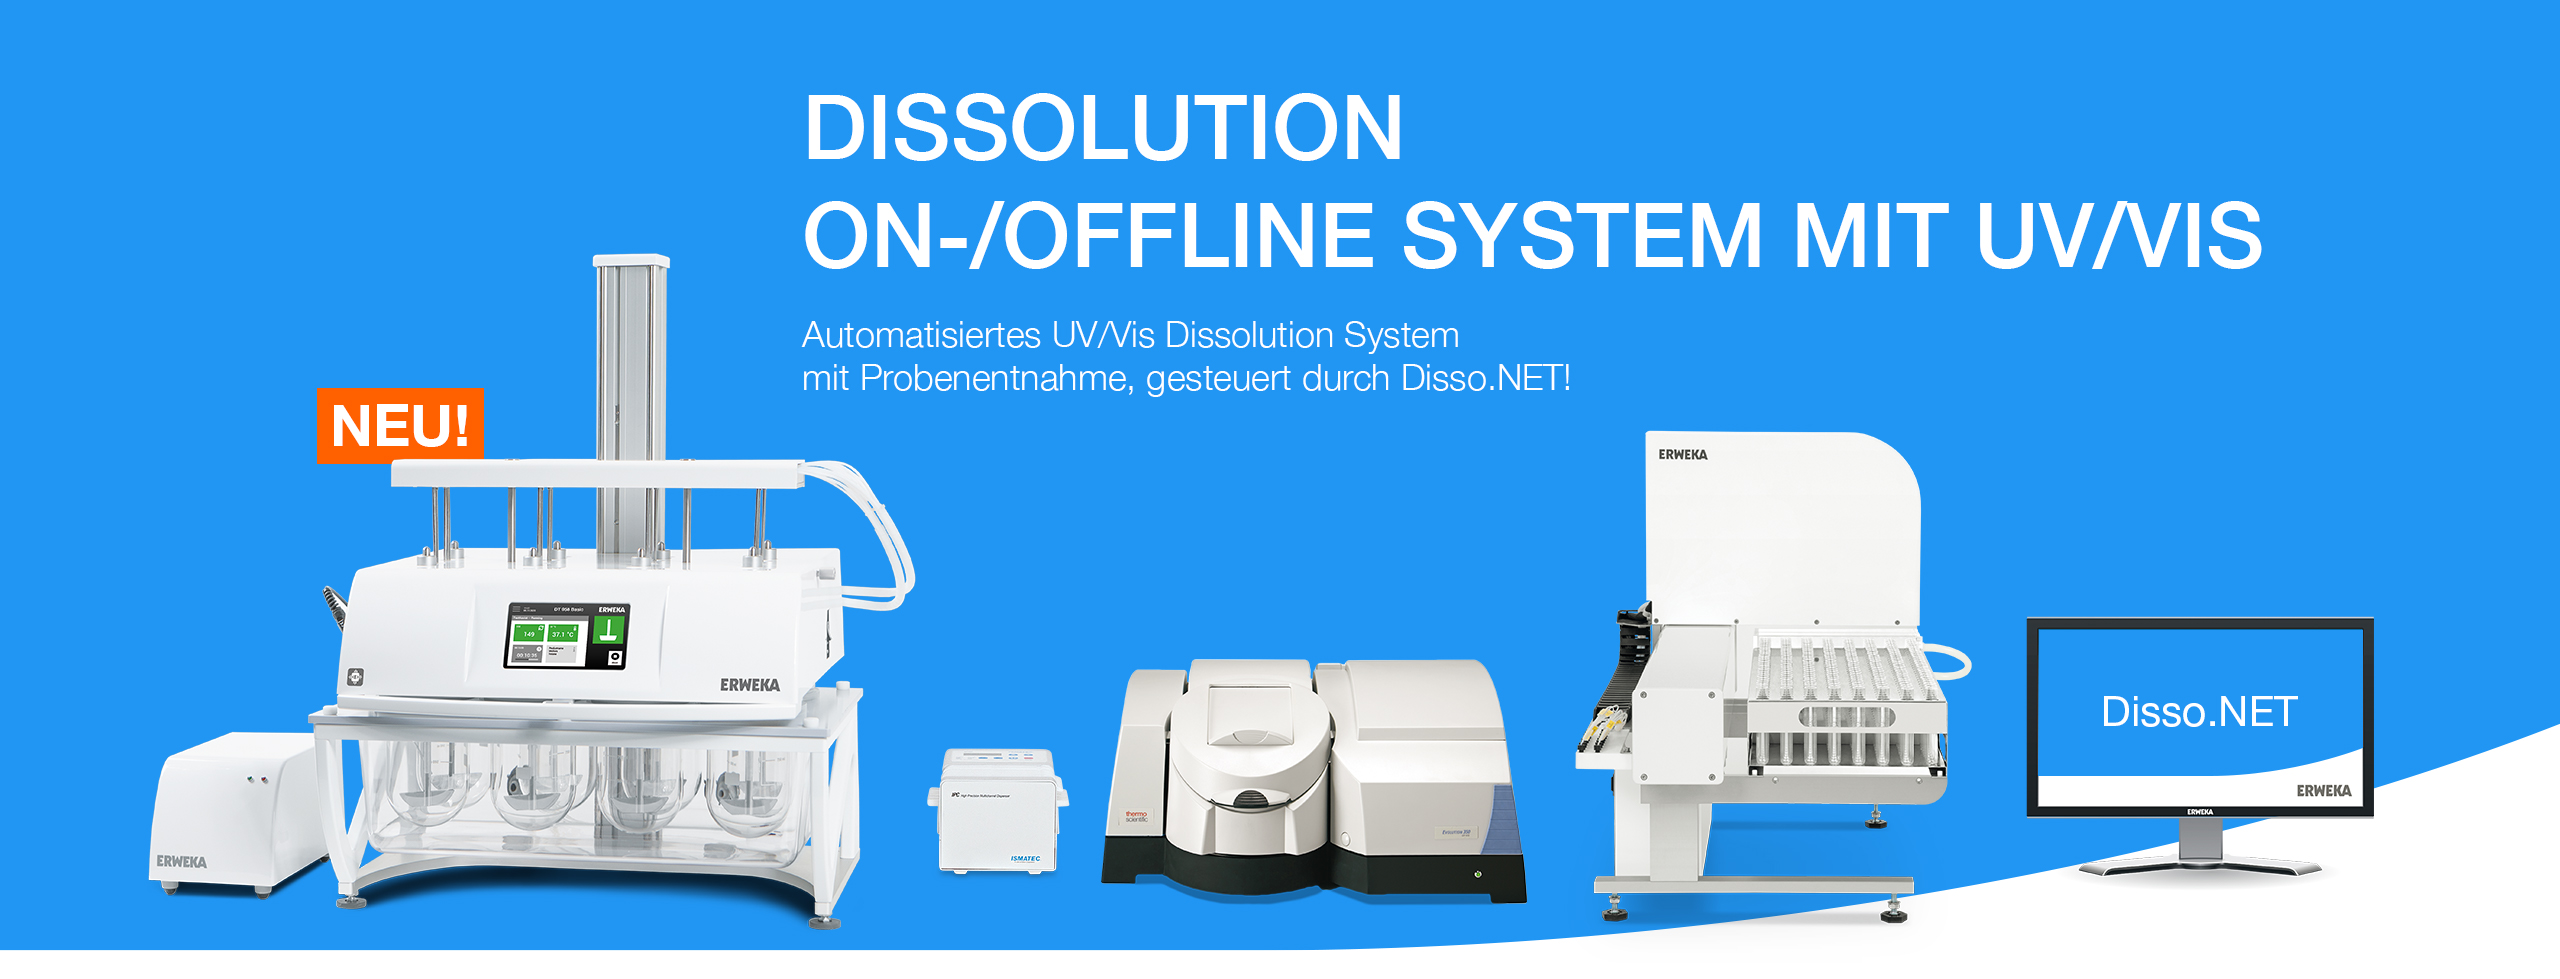 On-/Offline System mit UV/Vis